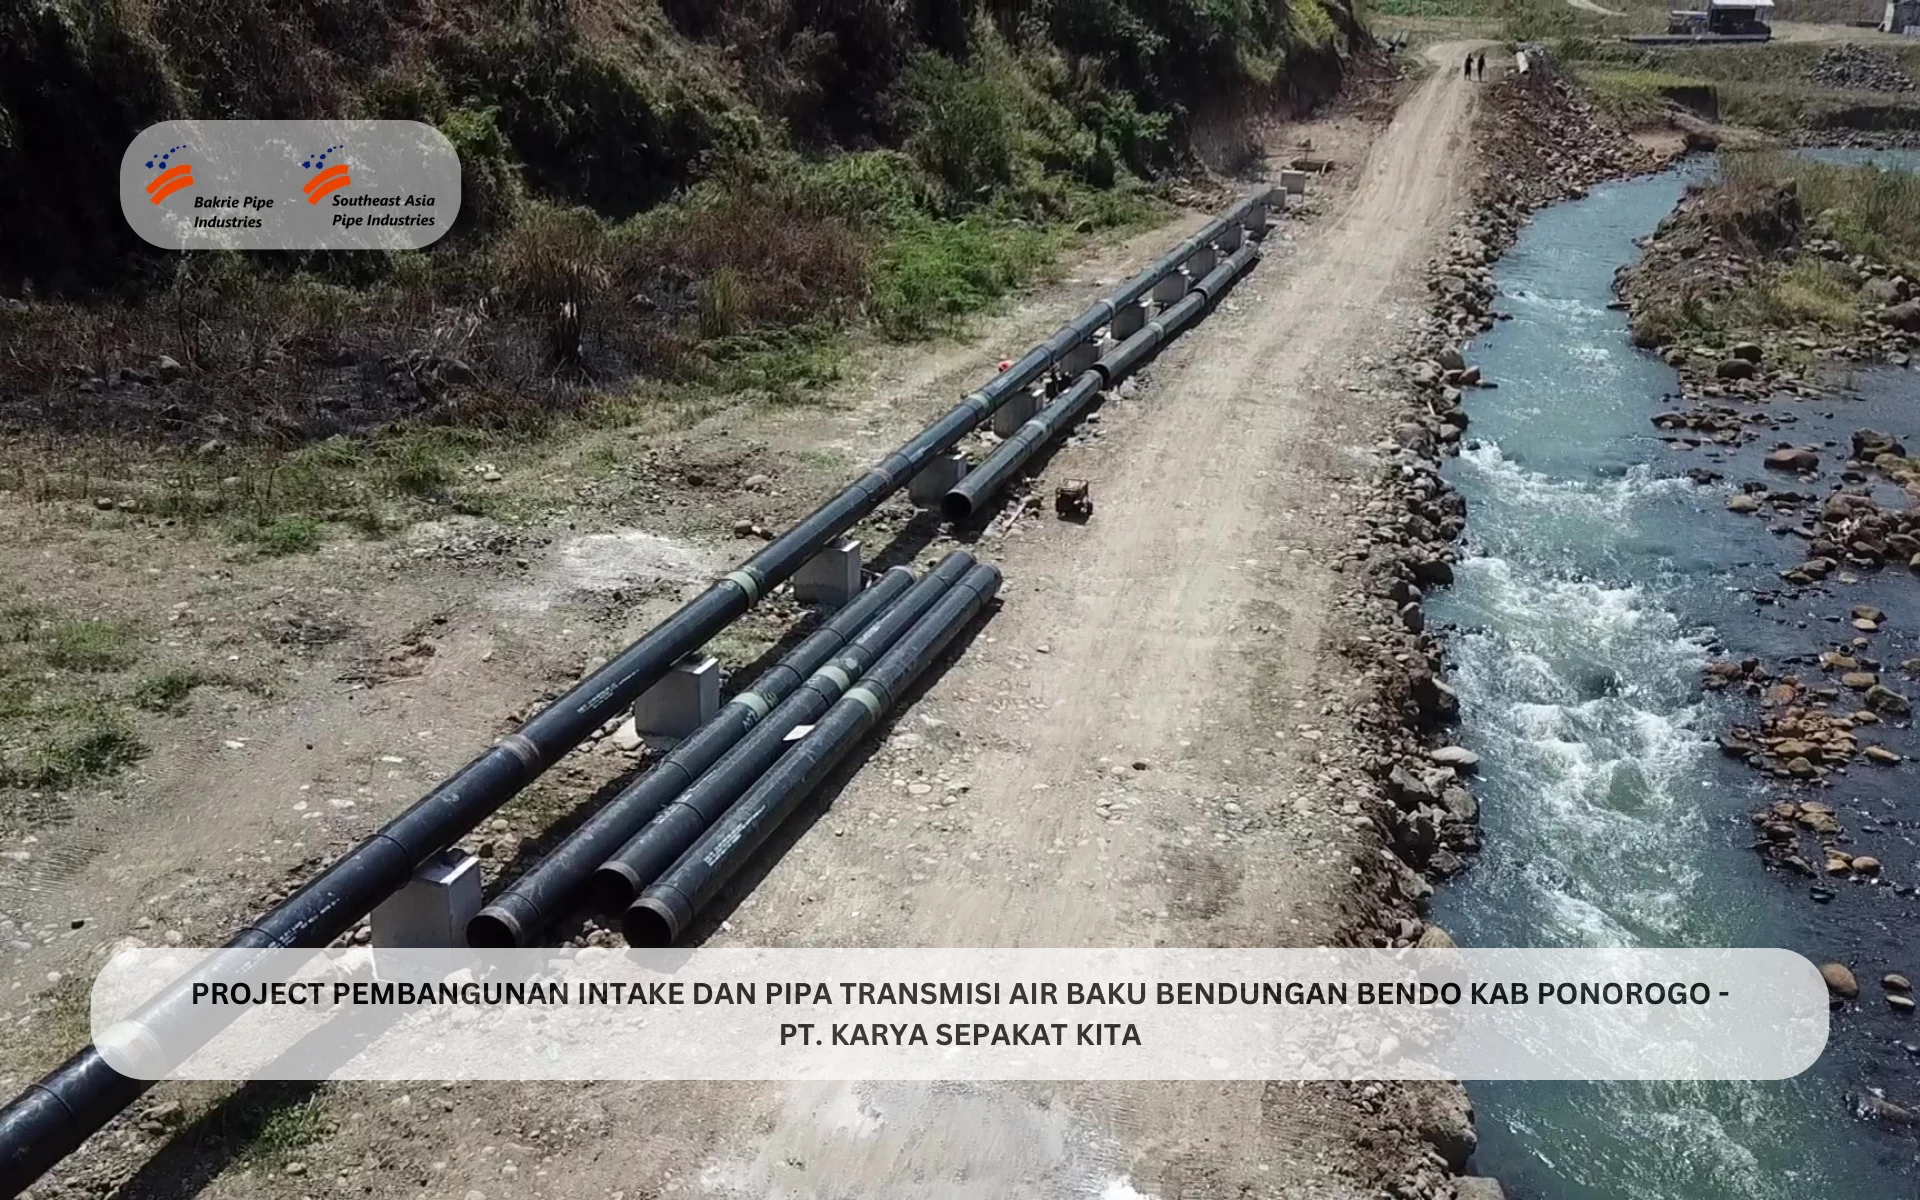 Pembangunan Intake dan Pipa Transmisi Air Baku Bendungan Bendo Kab. Ponorogo - PT. Karya Sepakat Kita image